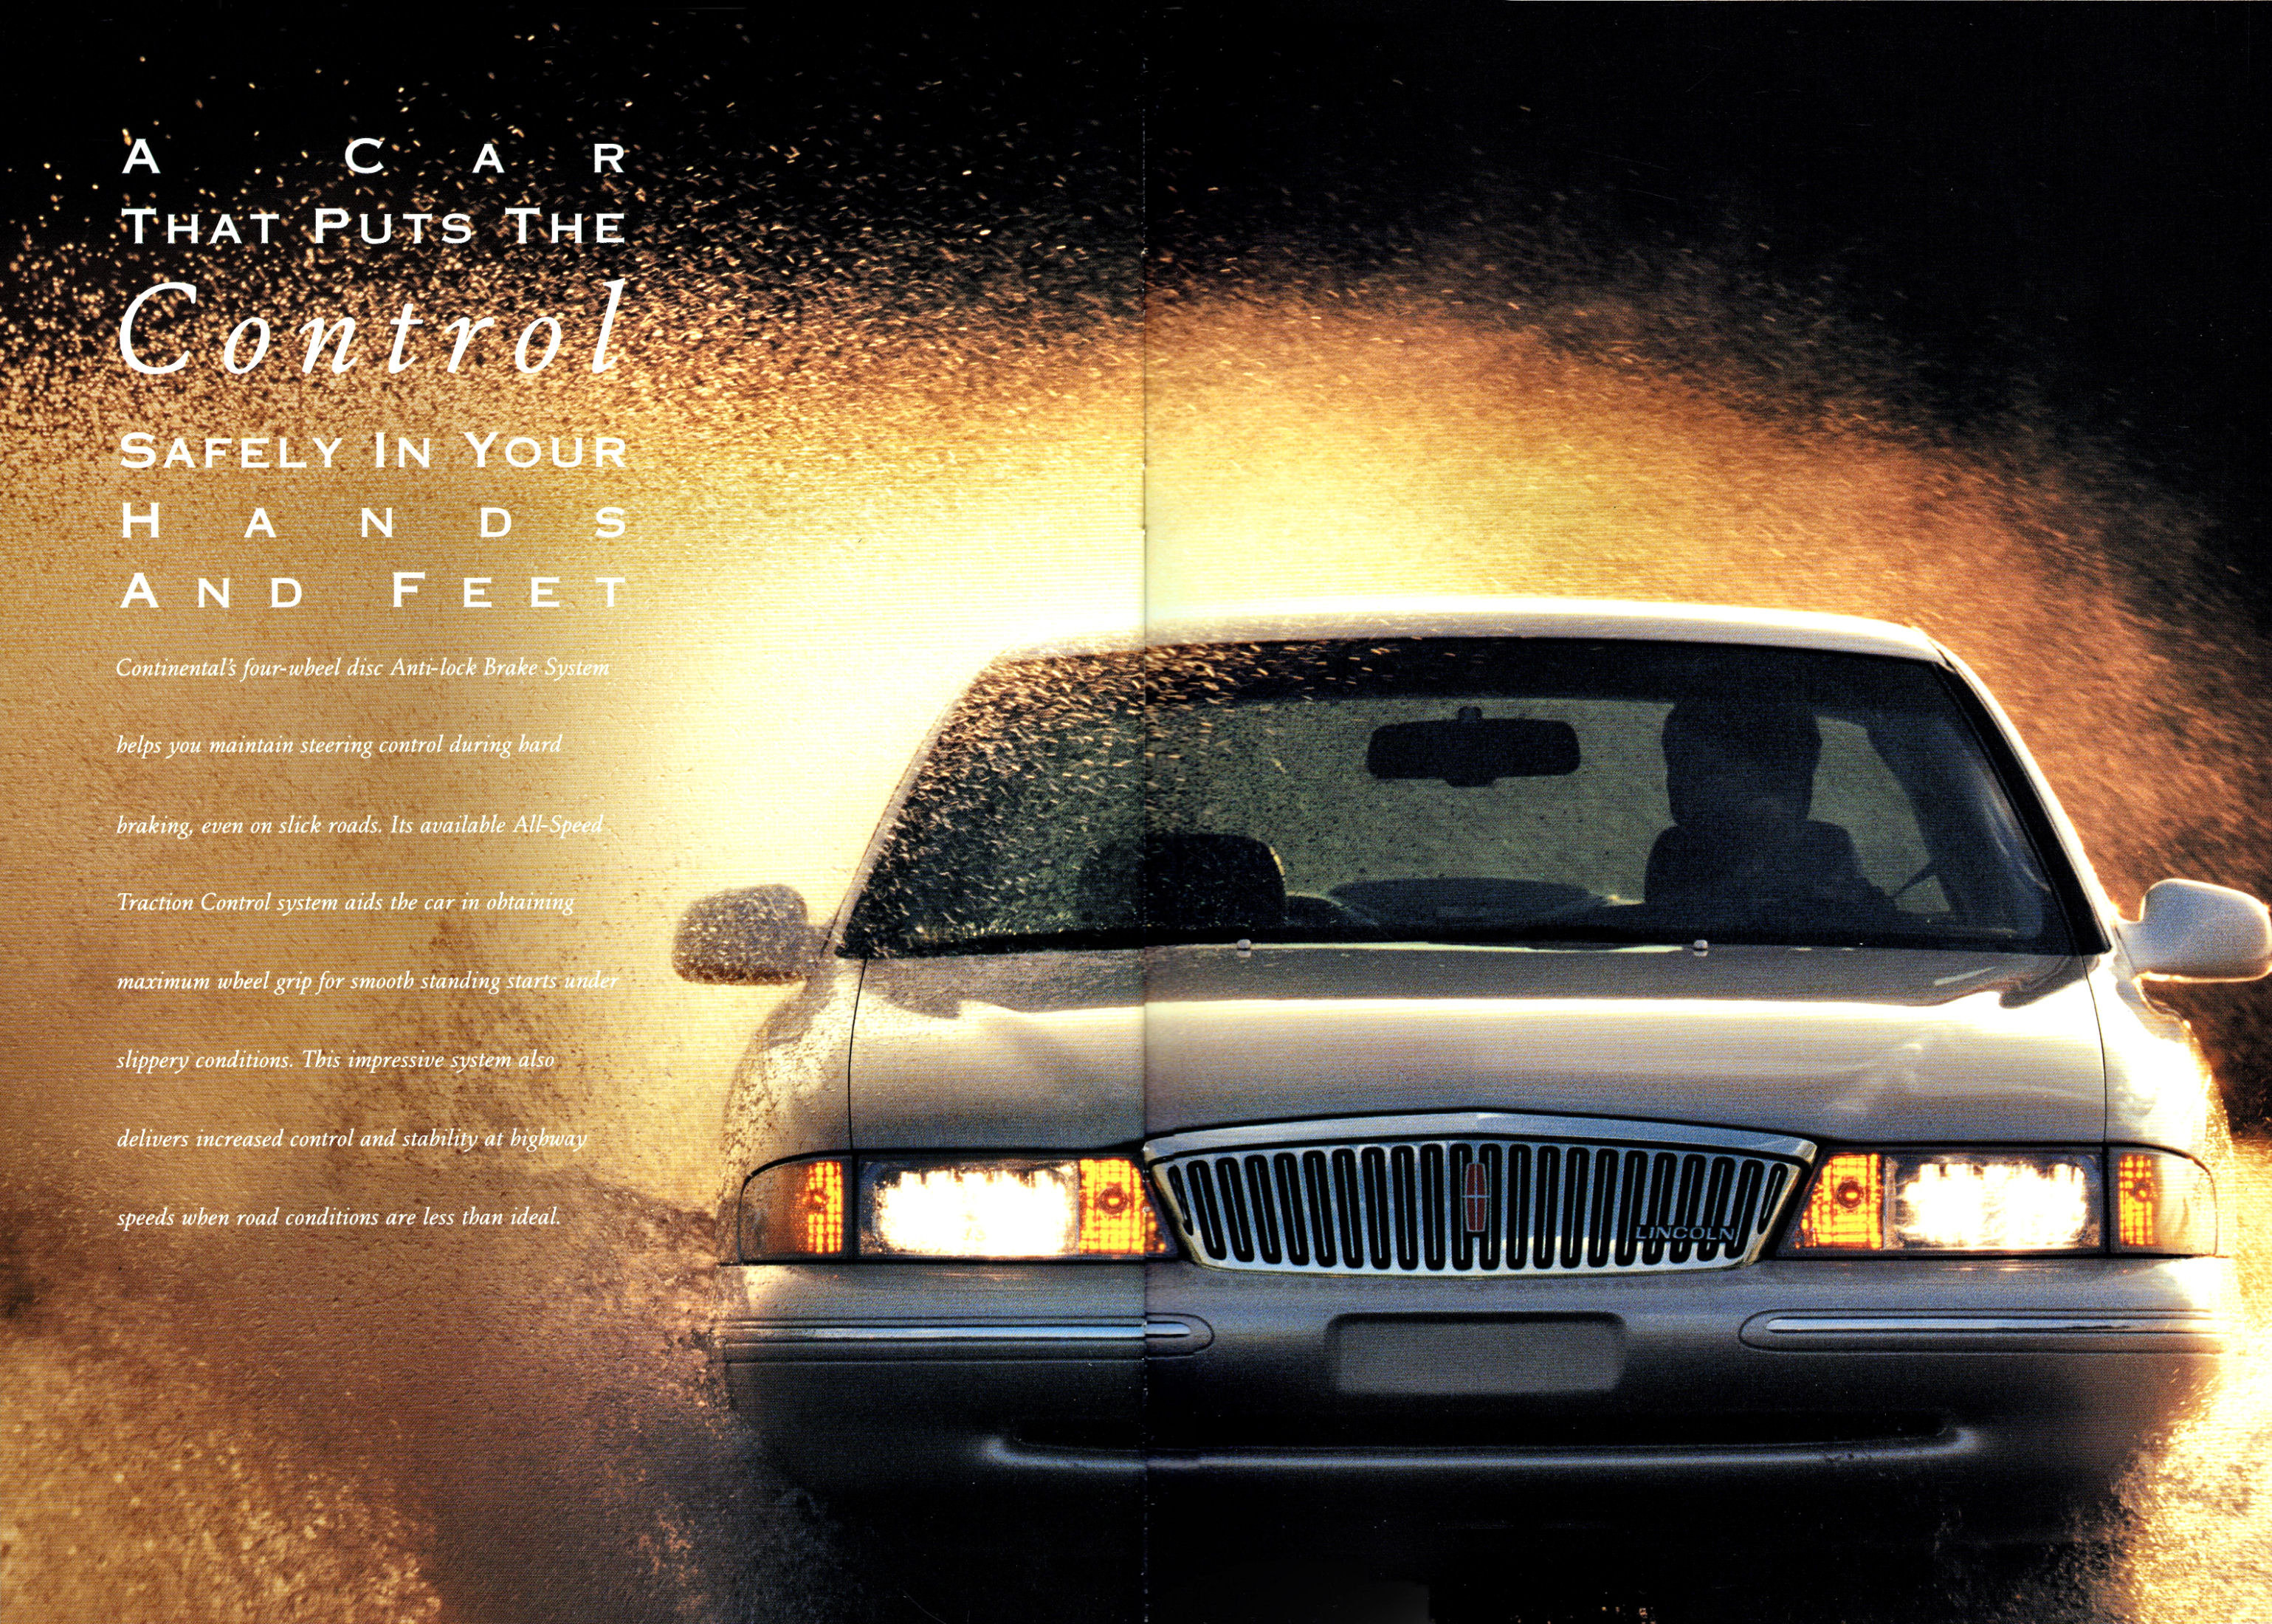 1996 Lincoln Continental-18-19